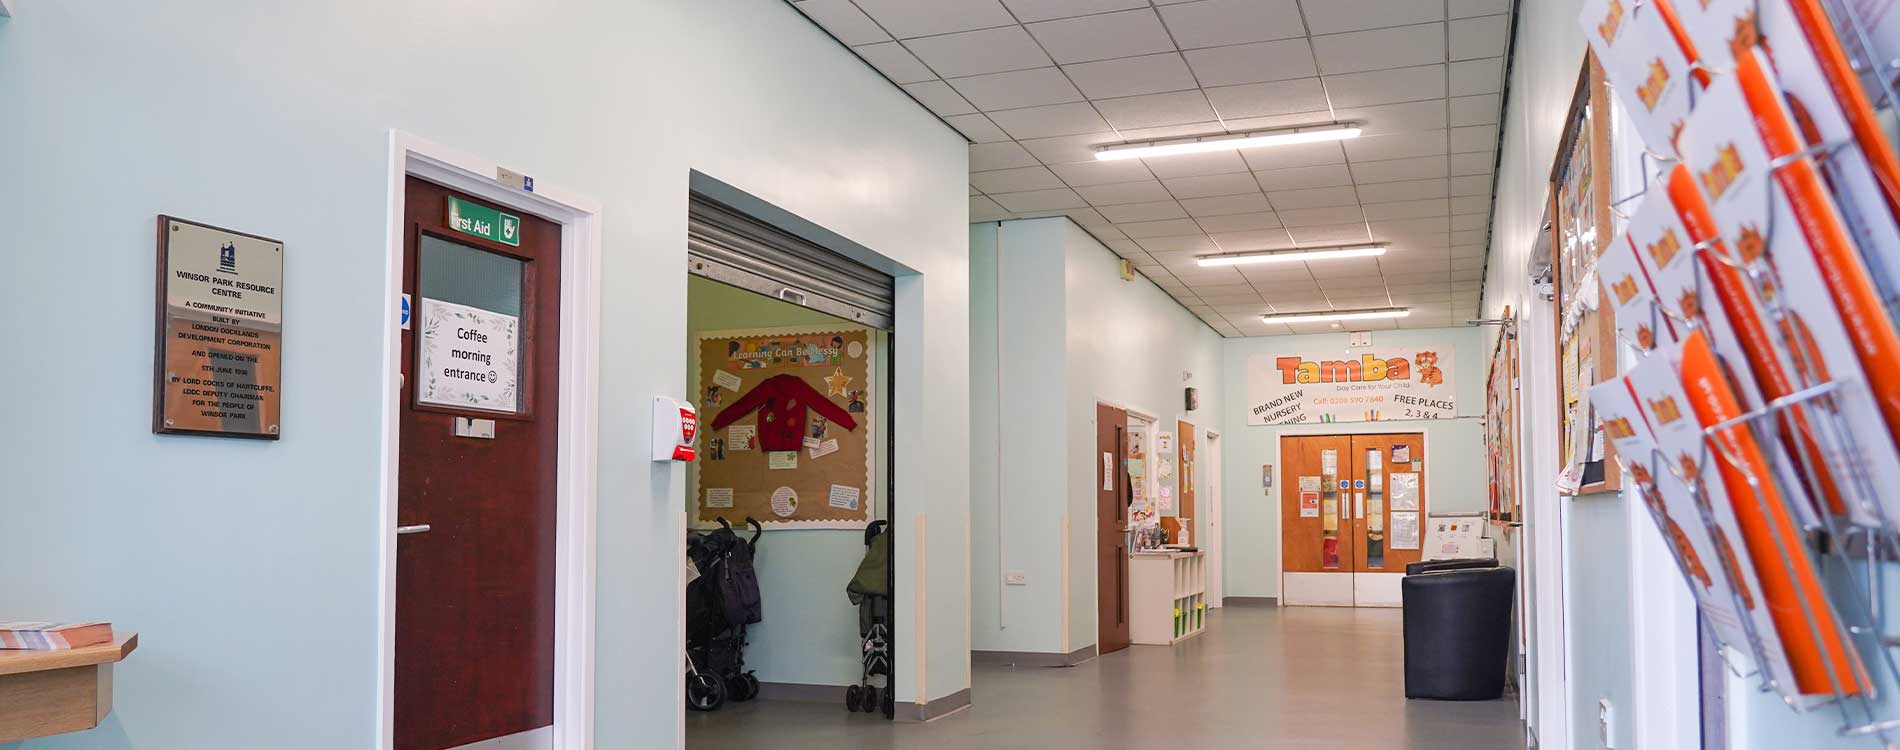 Winsor Park community centre hallway